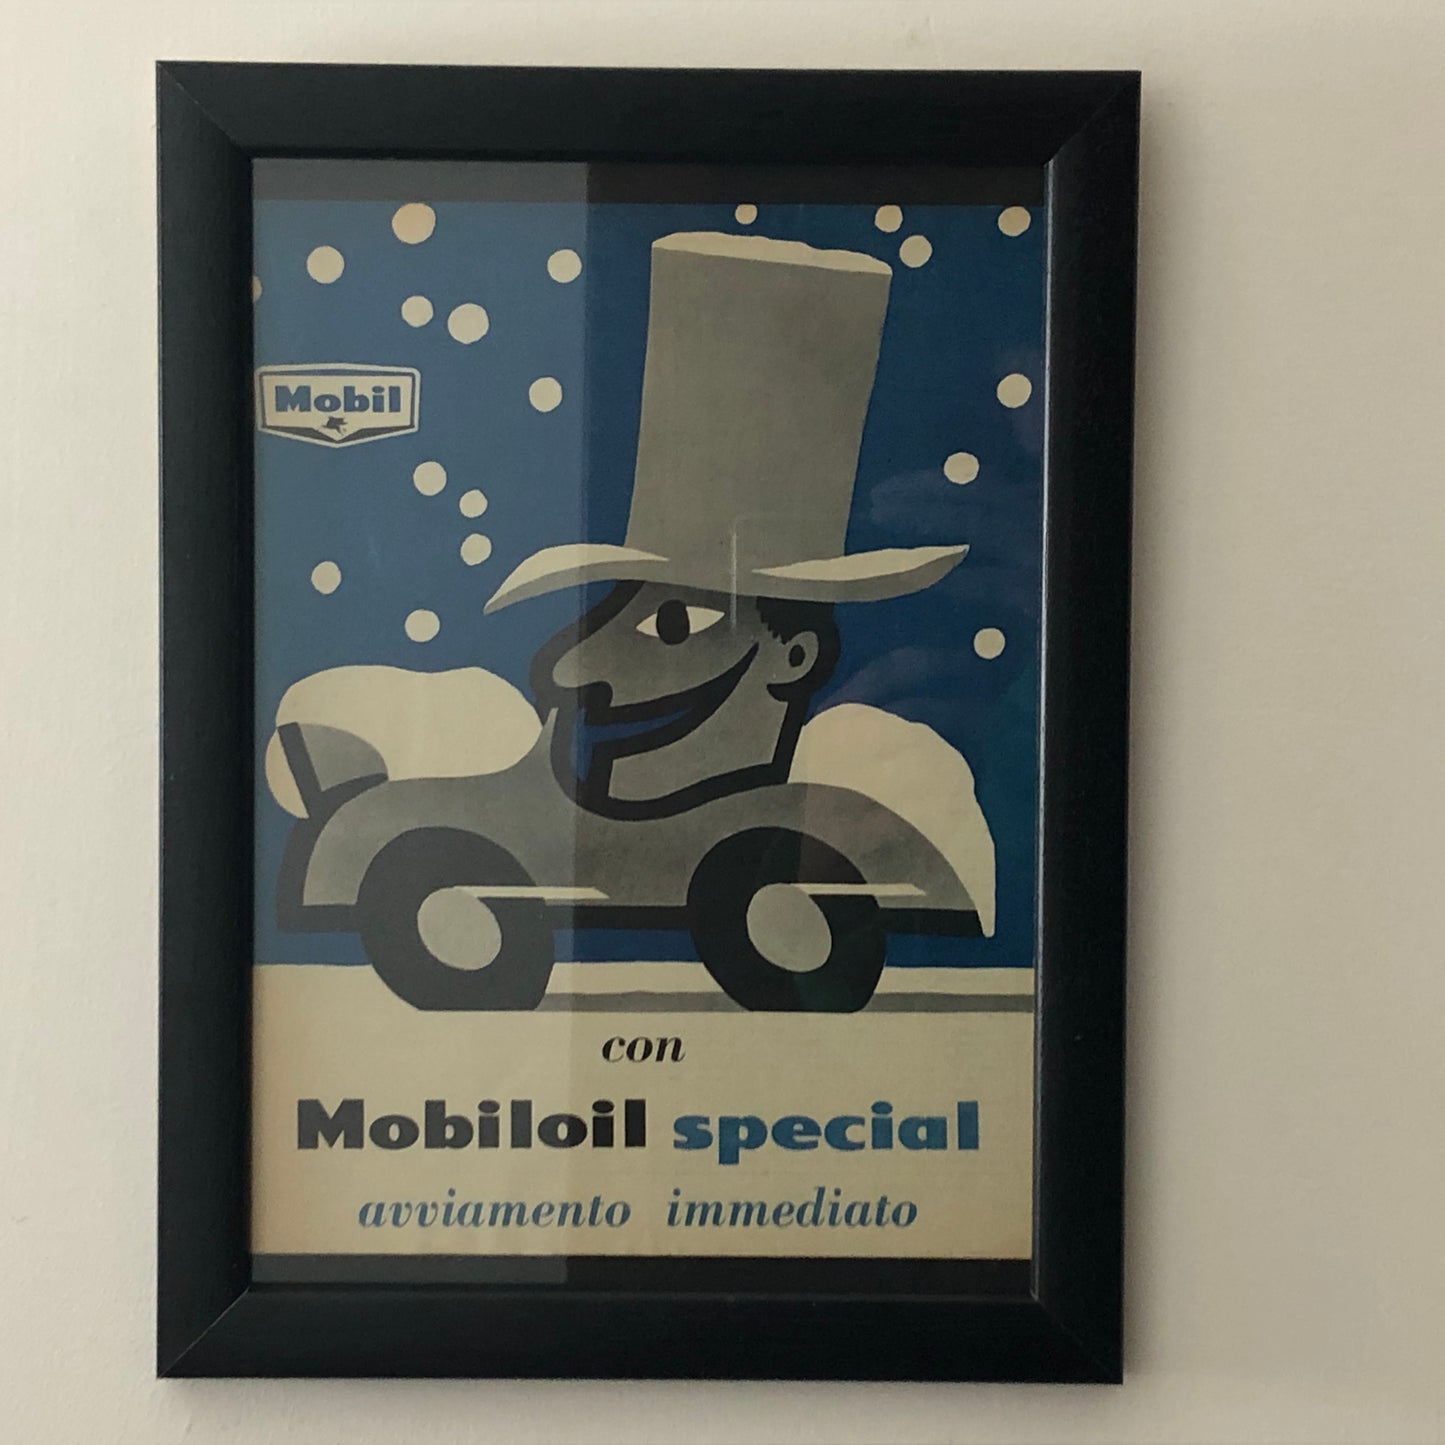 Mobil, Advertising Year 1960 Mobiloil Special Instant Start